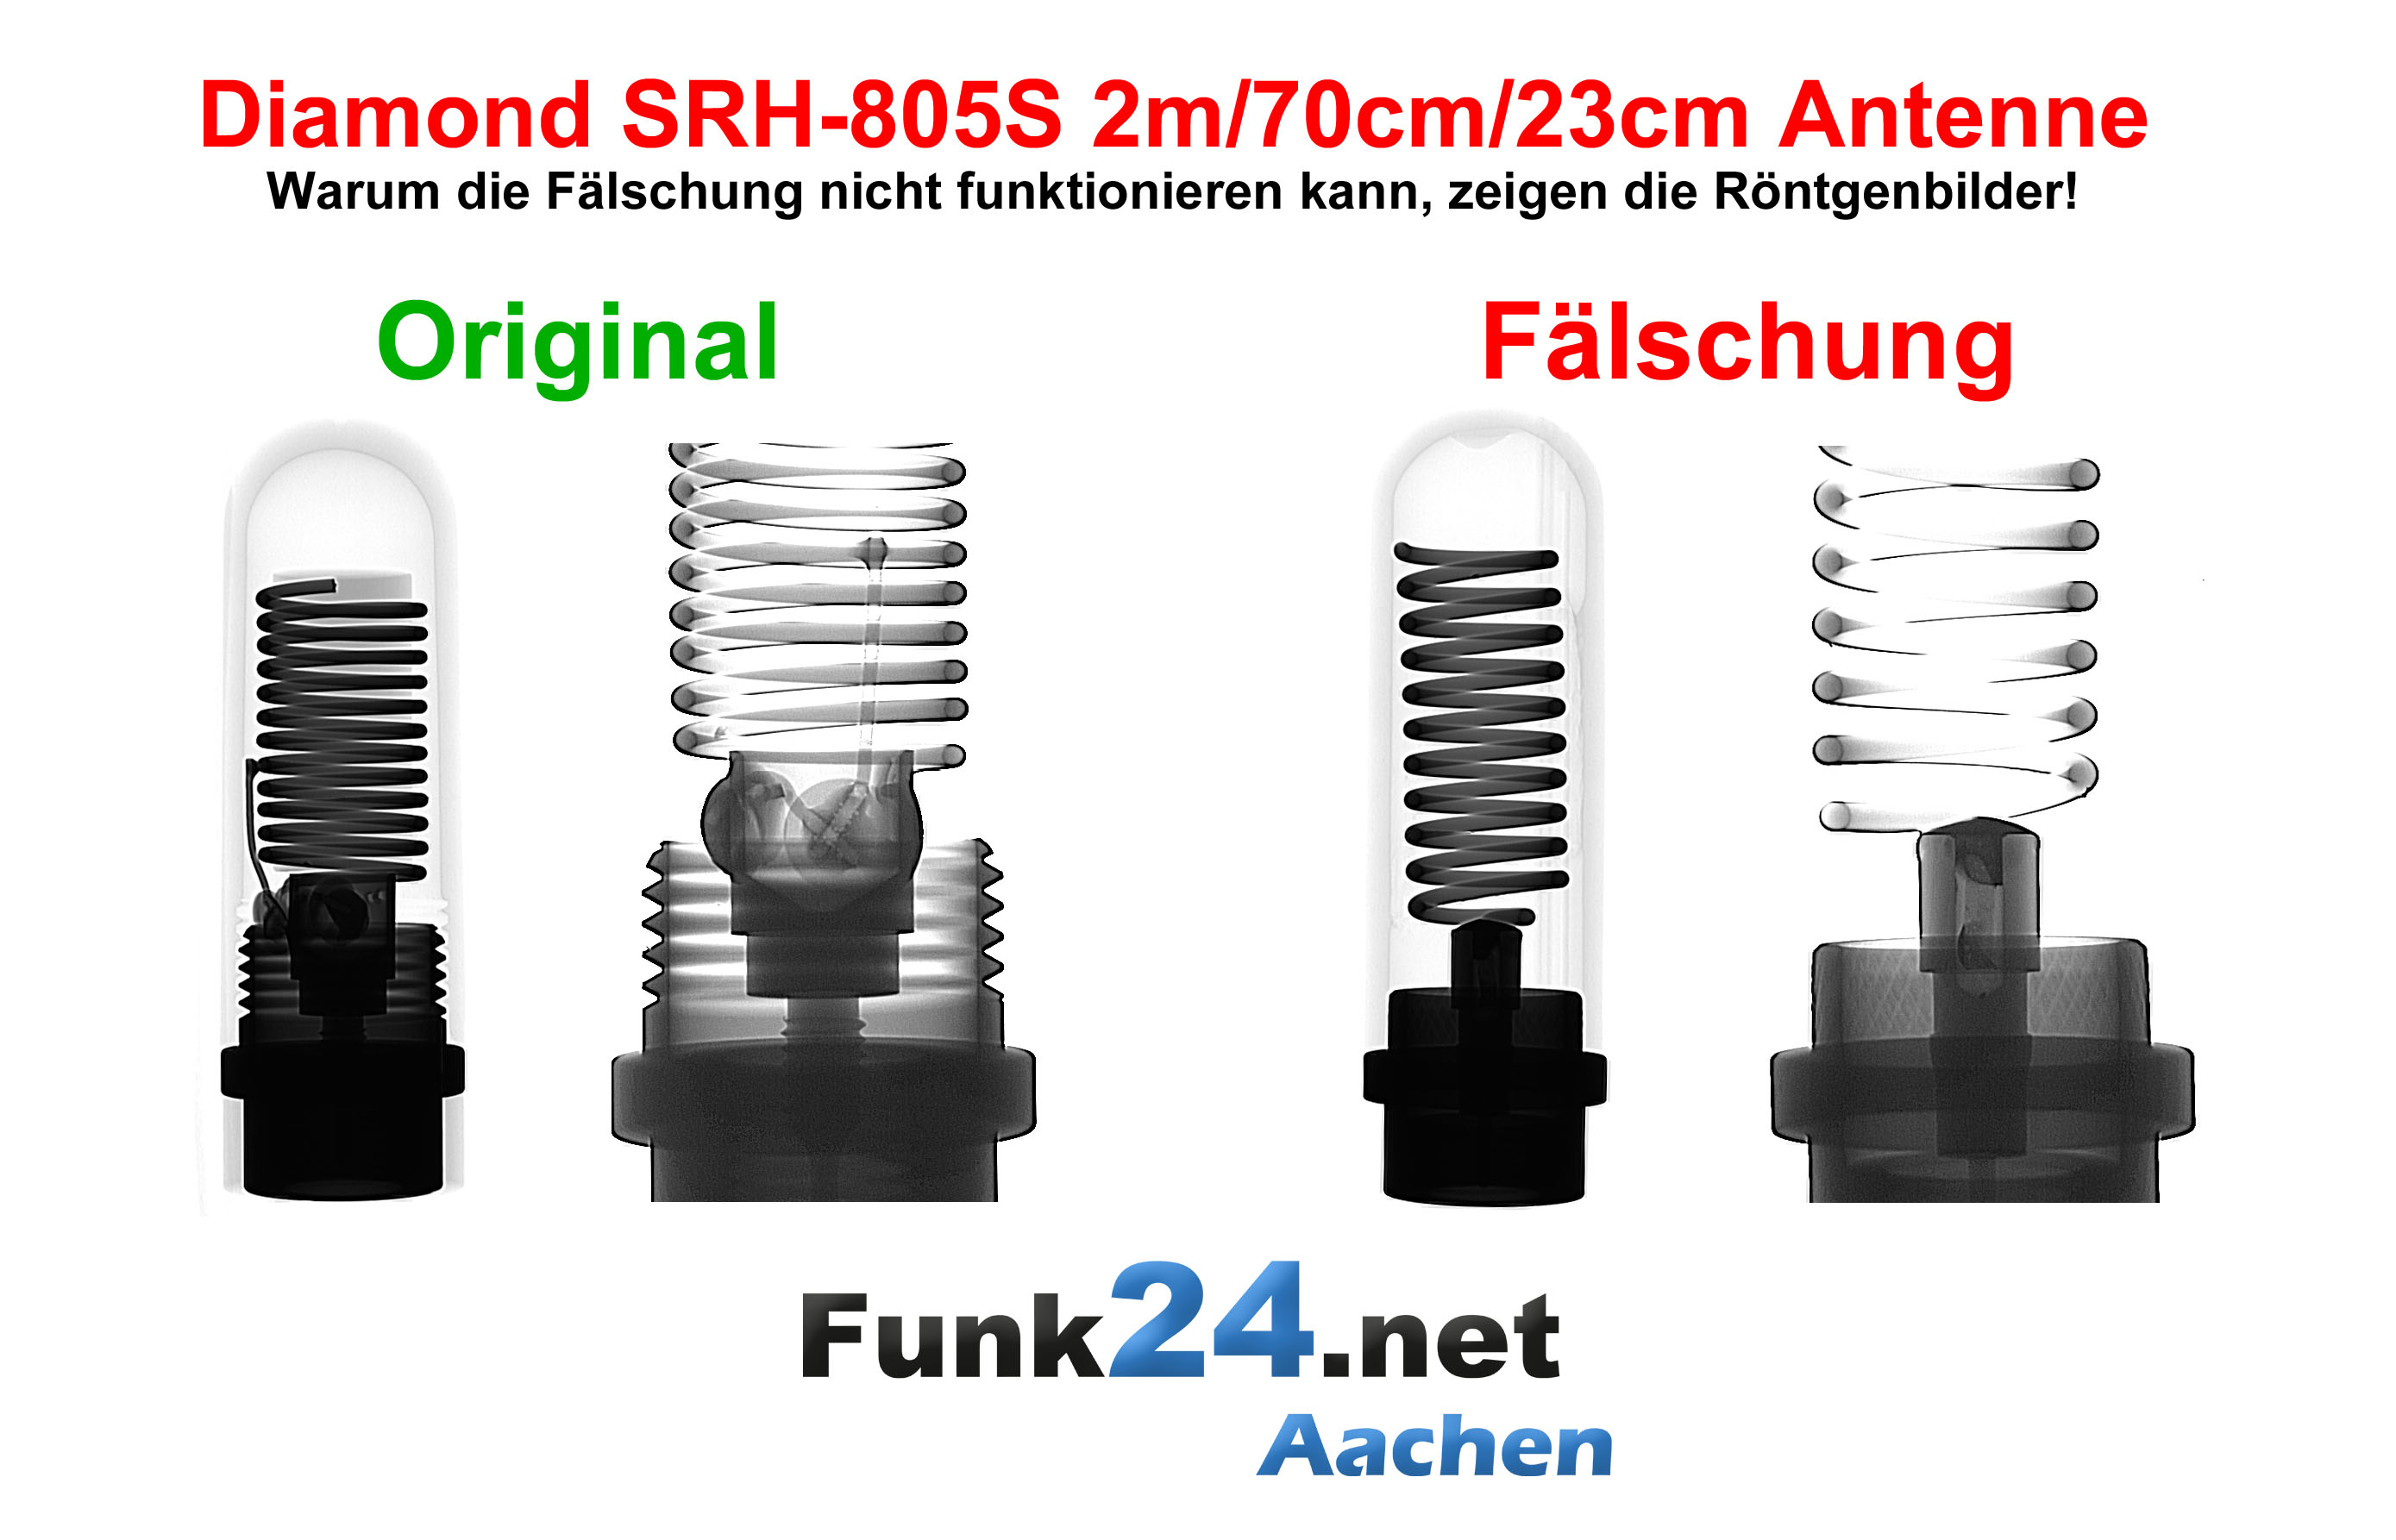 Diamond SRH-805S Kurze SMA Antenne für 2m/70cm/23cm